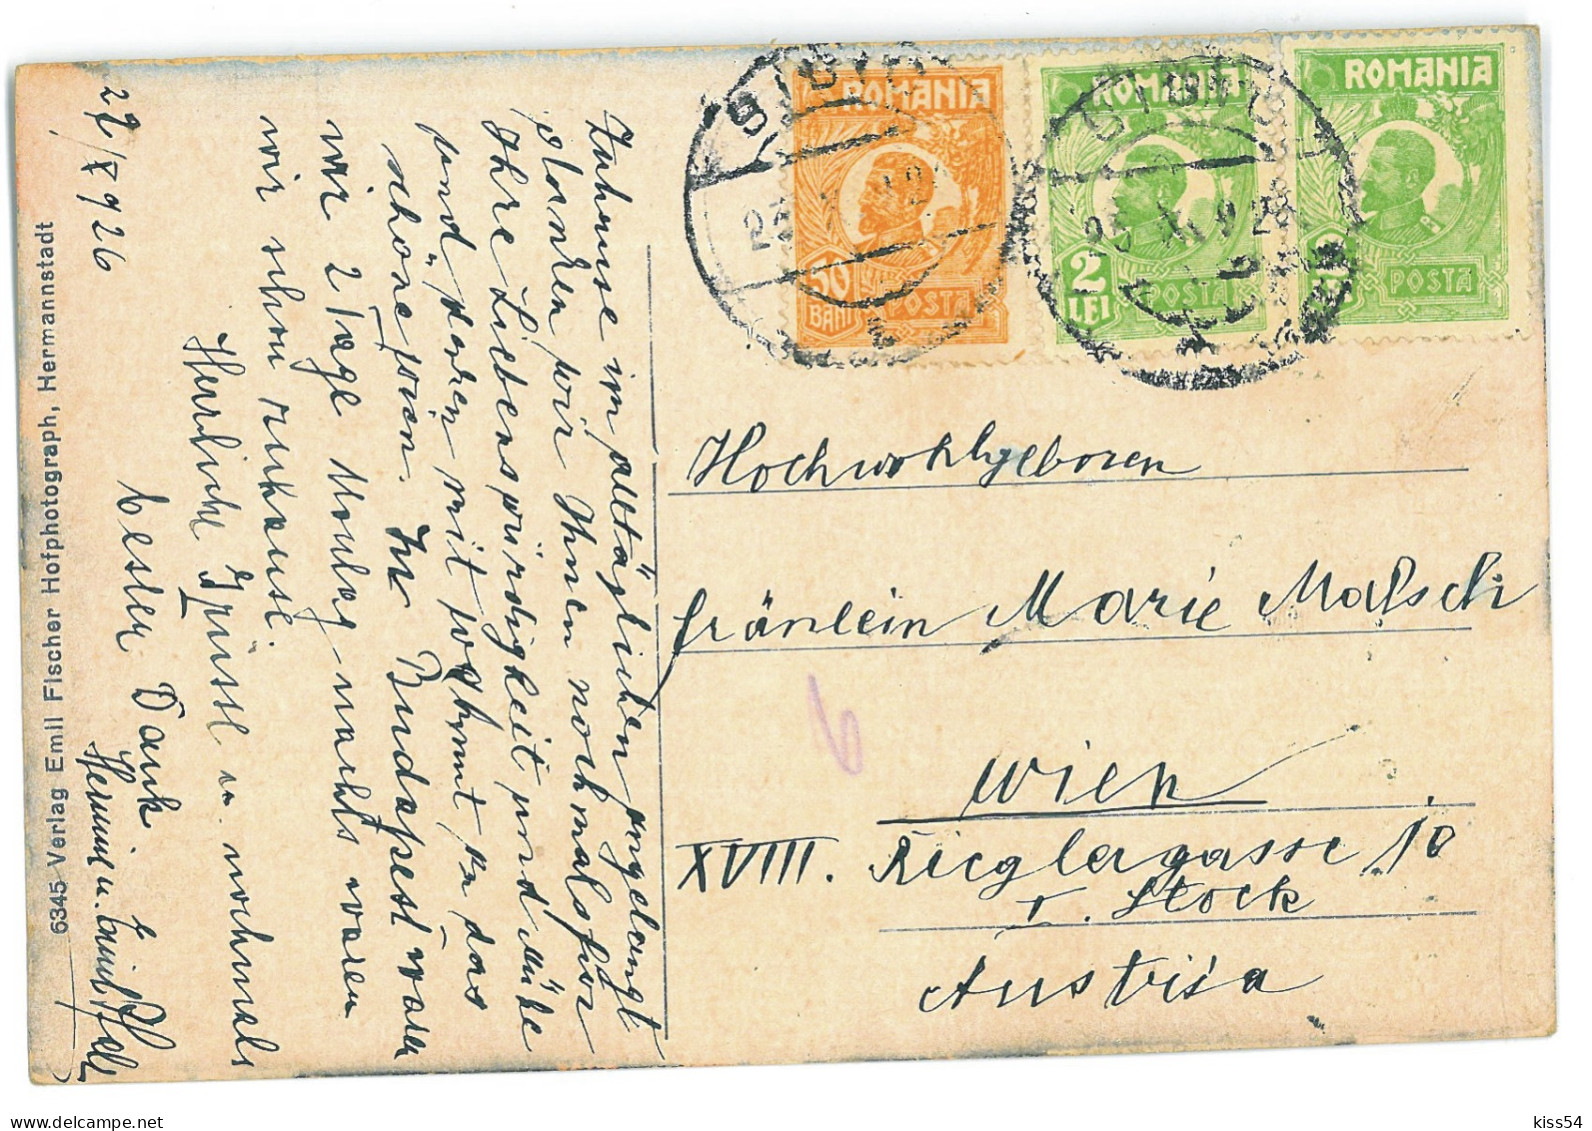 RO 09 - 22407 SIBIU, Tramway, Romania - Old Postcard - Used - 1926 - Roemenië